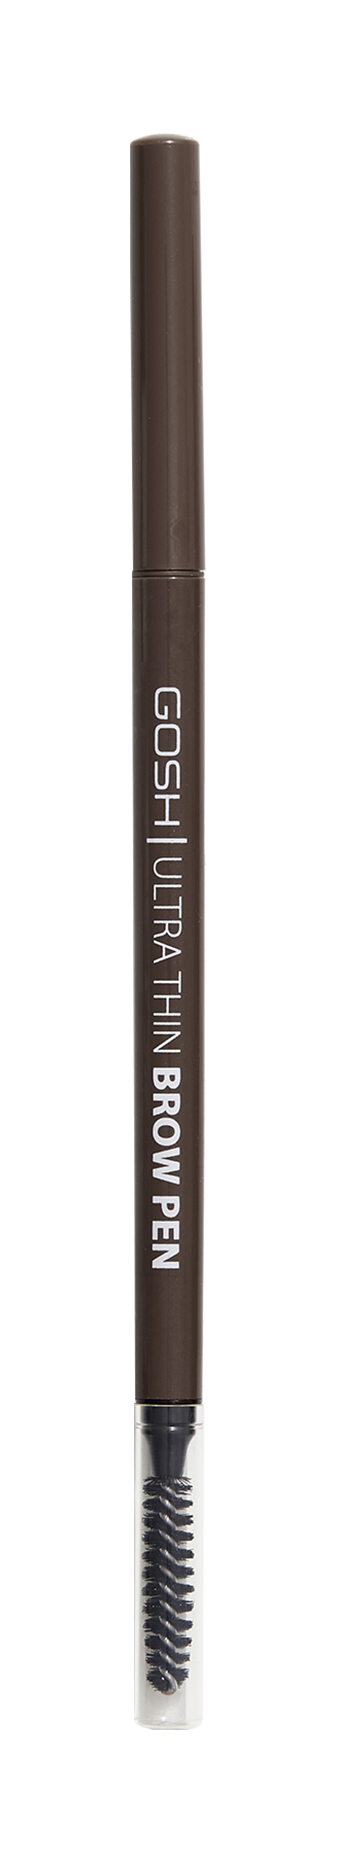 Карандаш для бровей Gosh Ultra Thin Brow Pen темно-коричневый